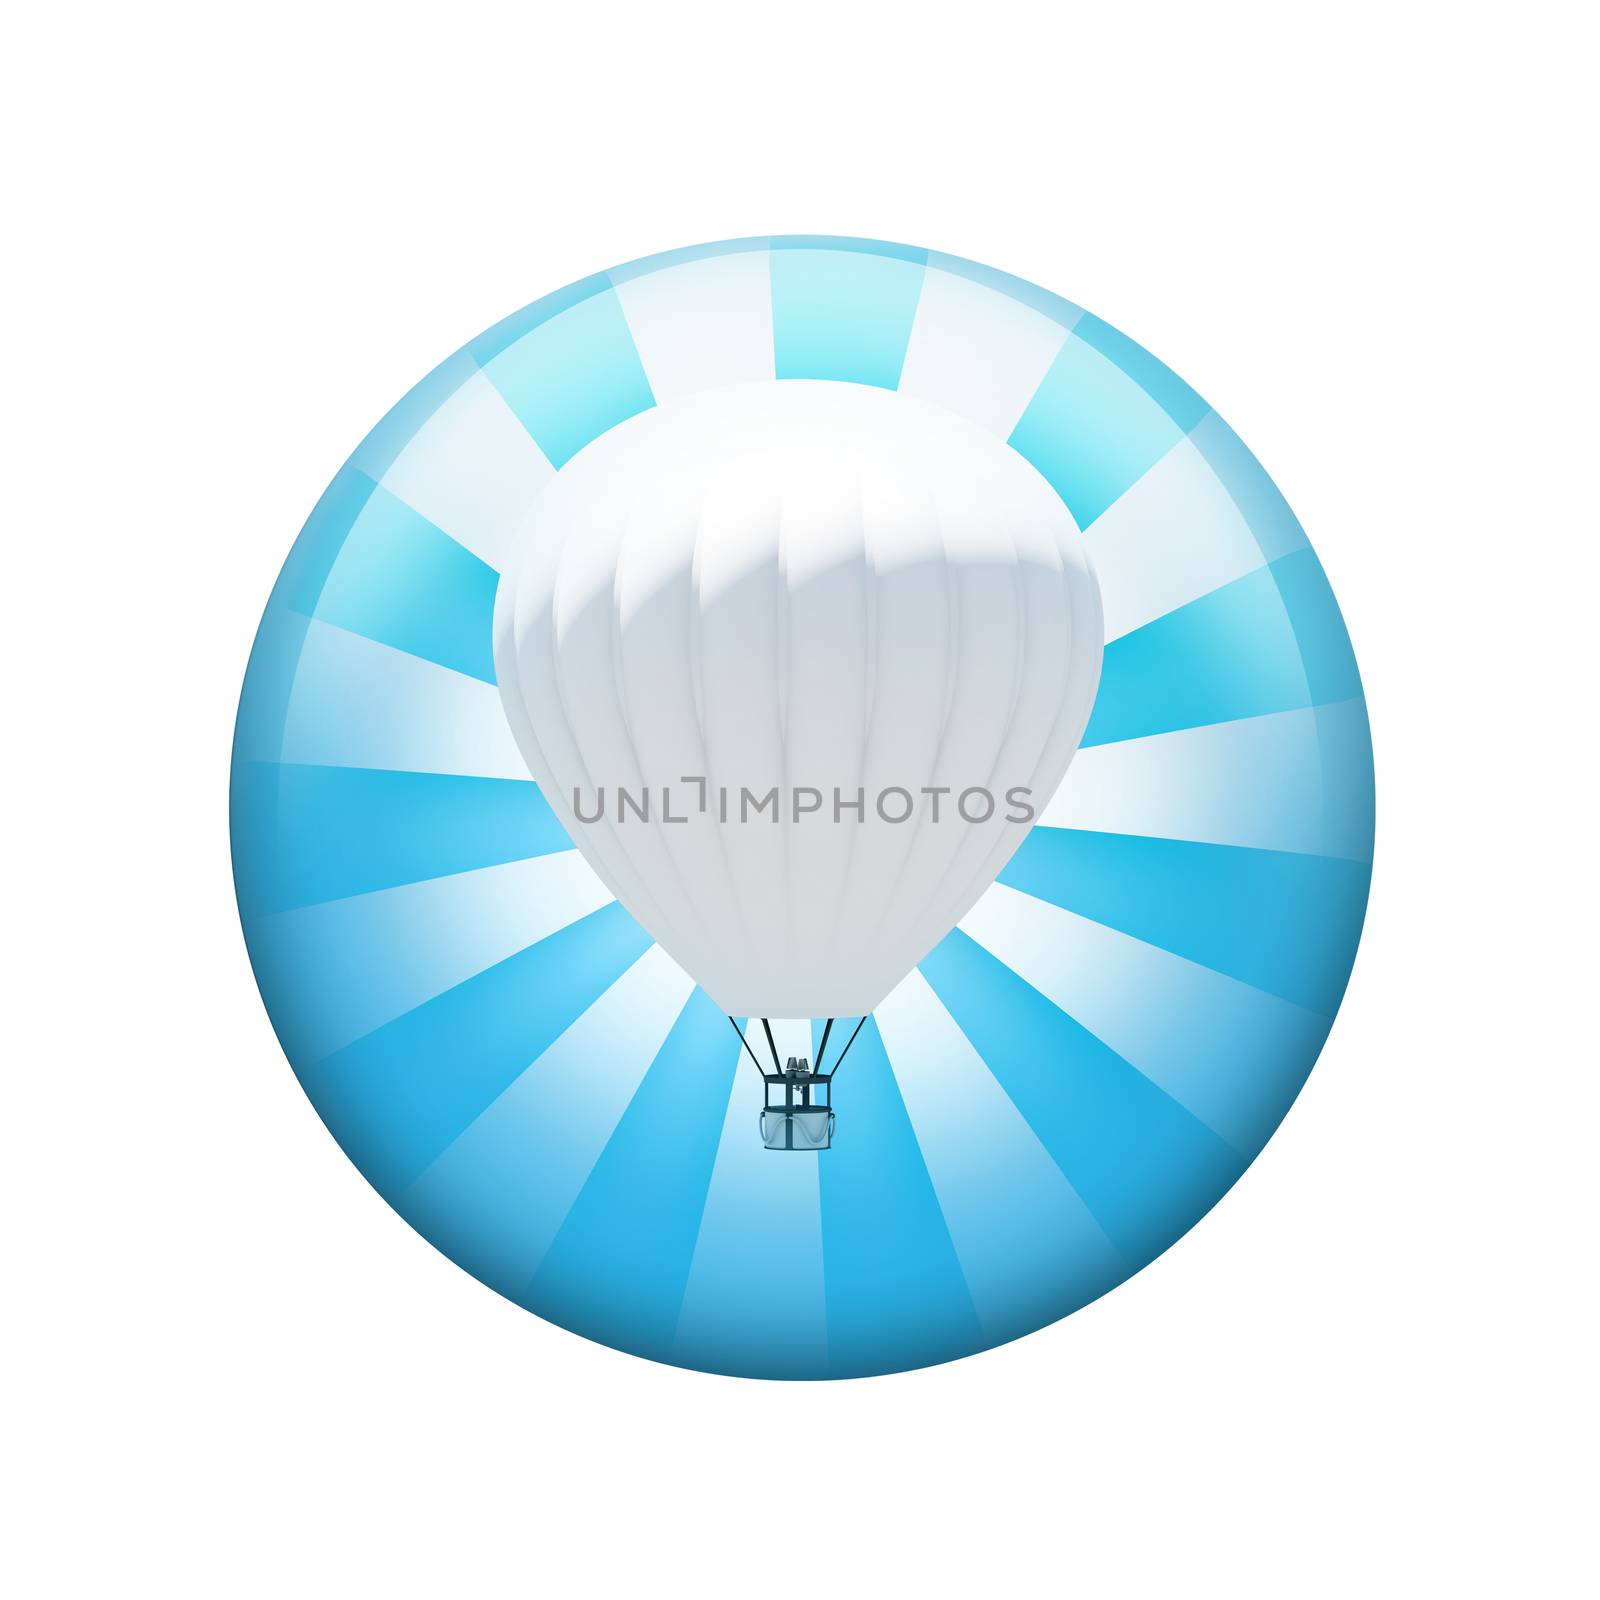 Hot air balloon. Spherical glossy button. Web element